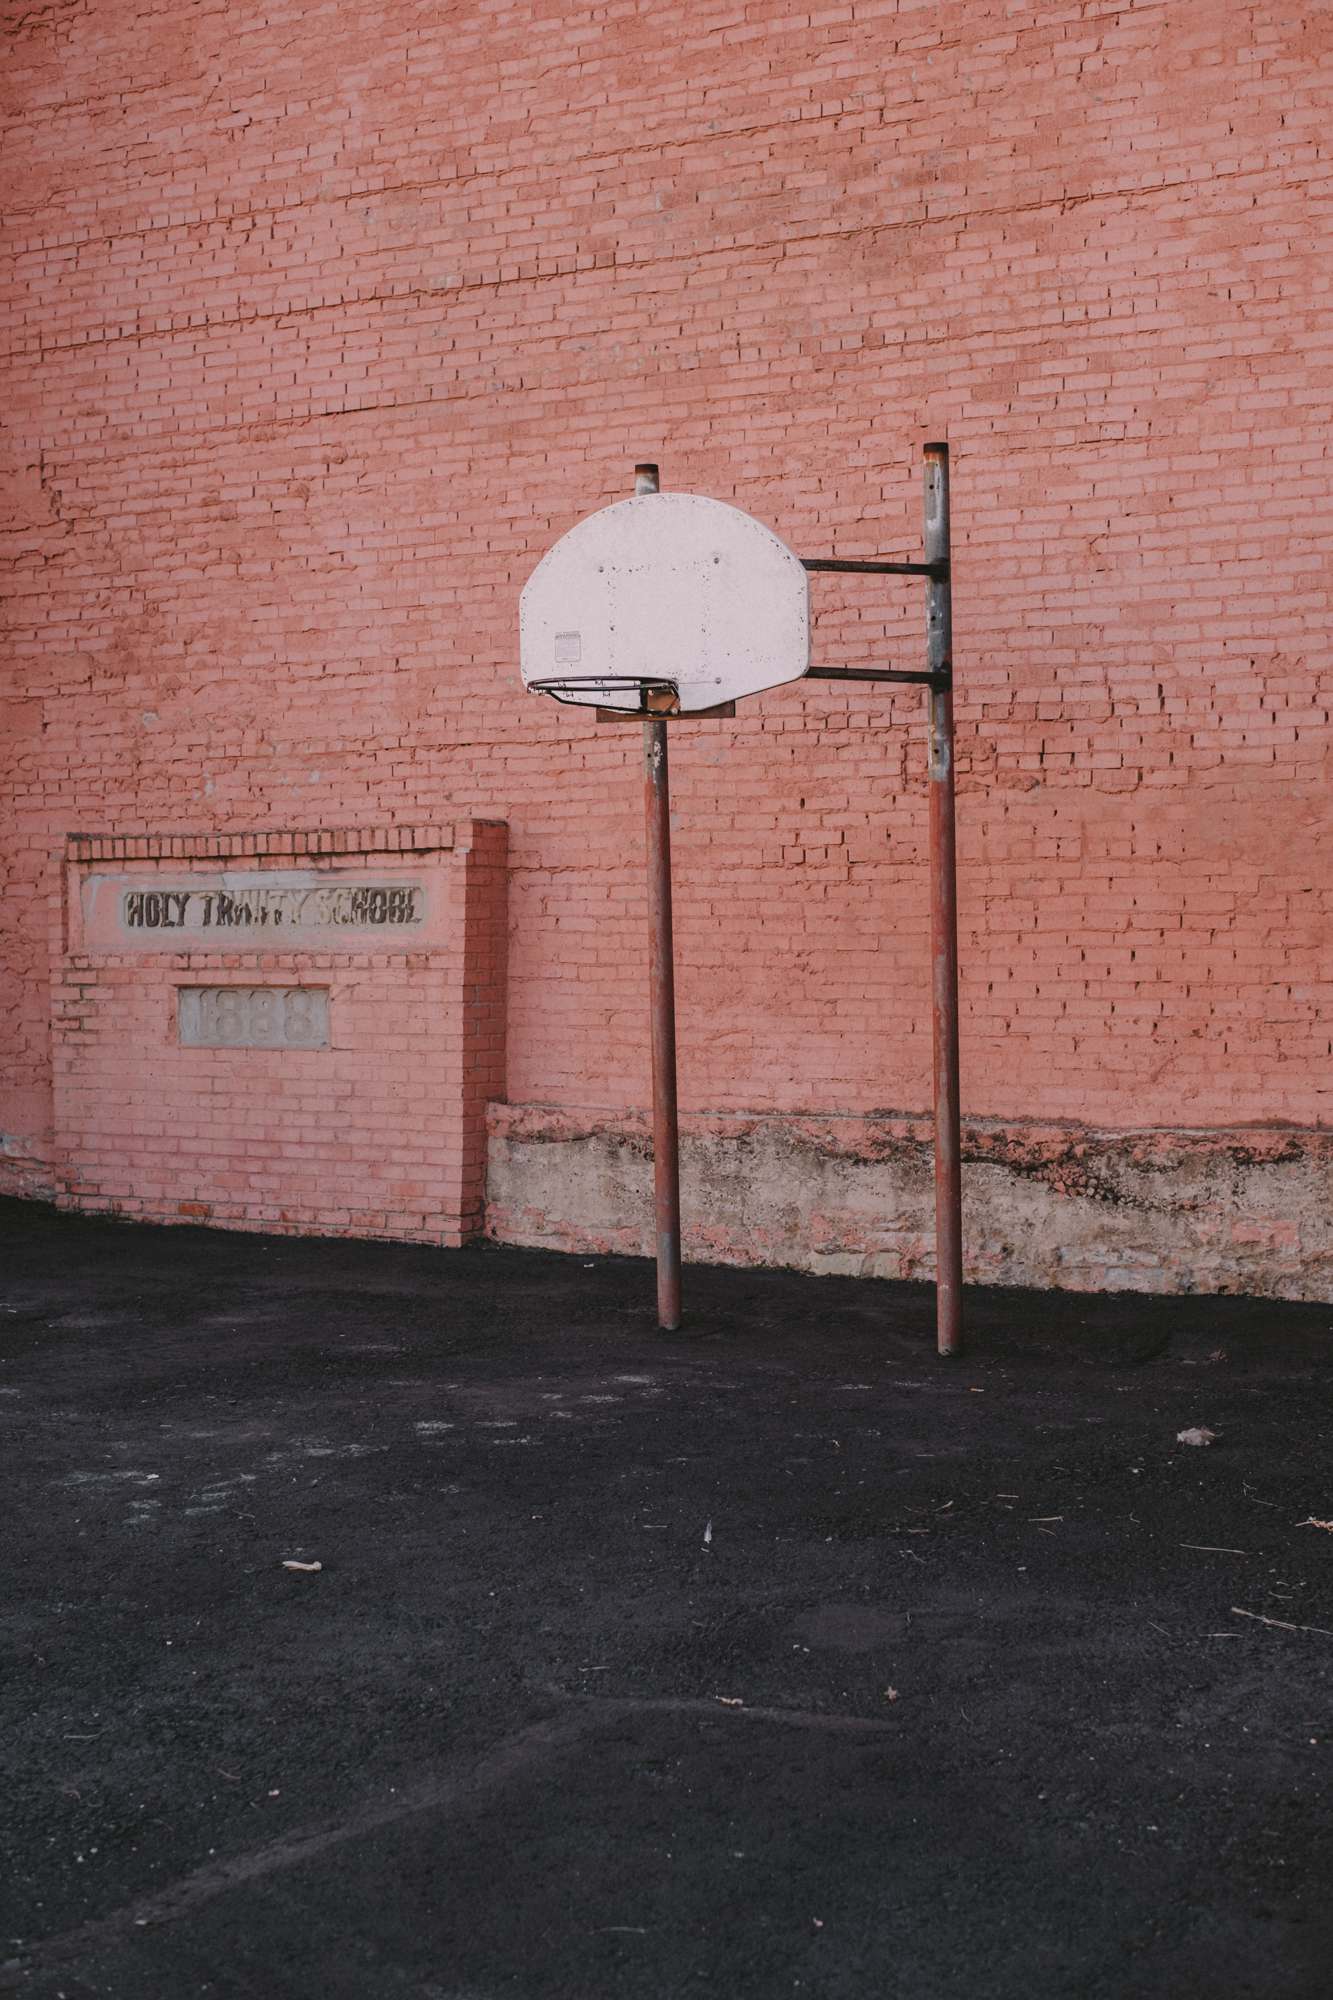 Holy Trinity School Basketball Hoop